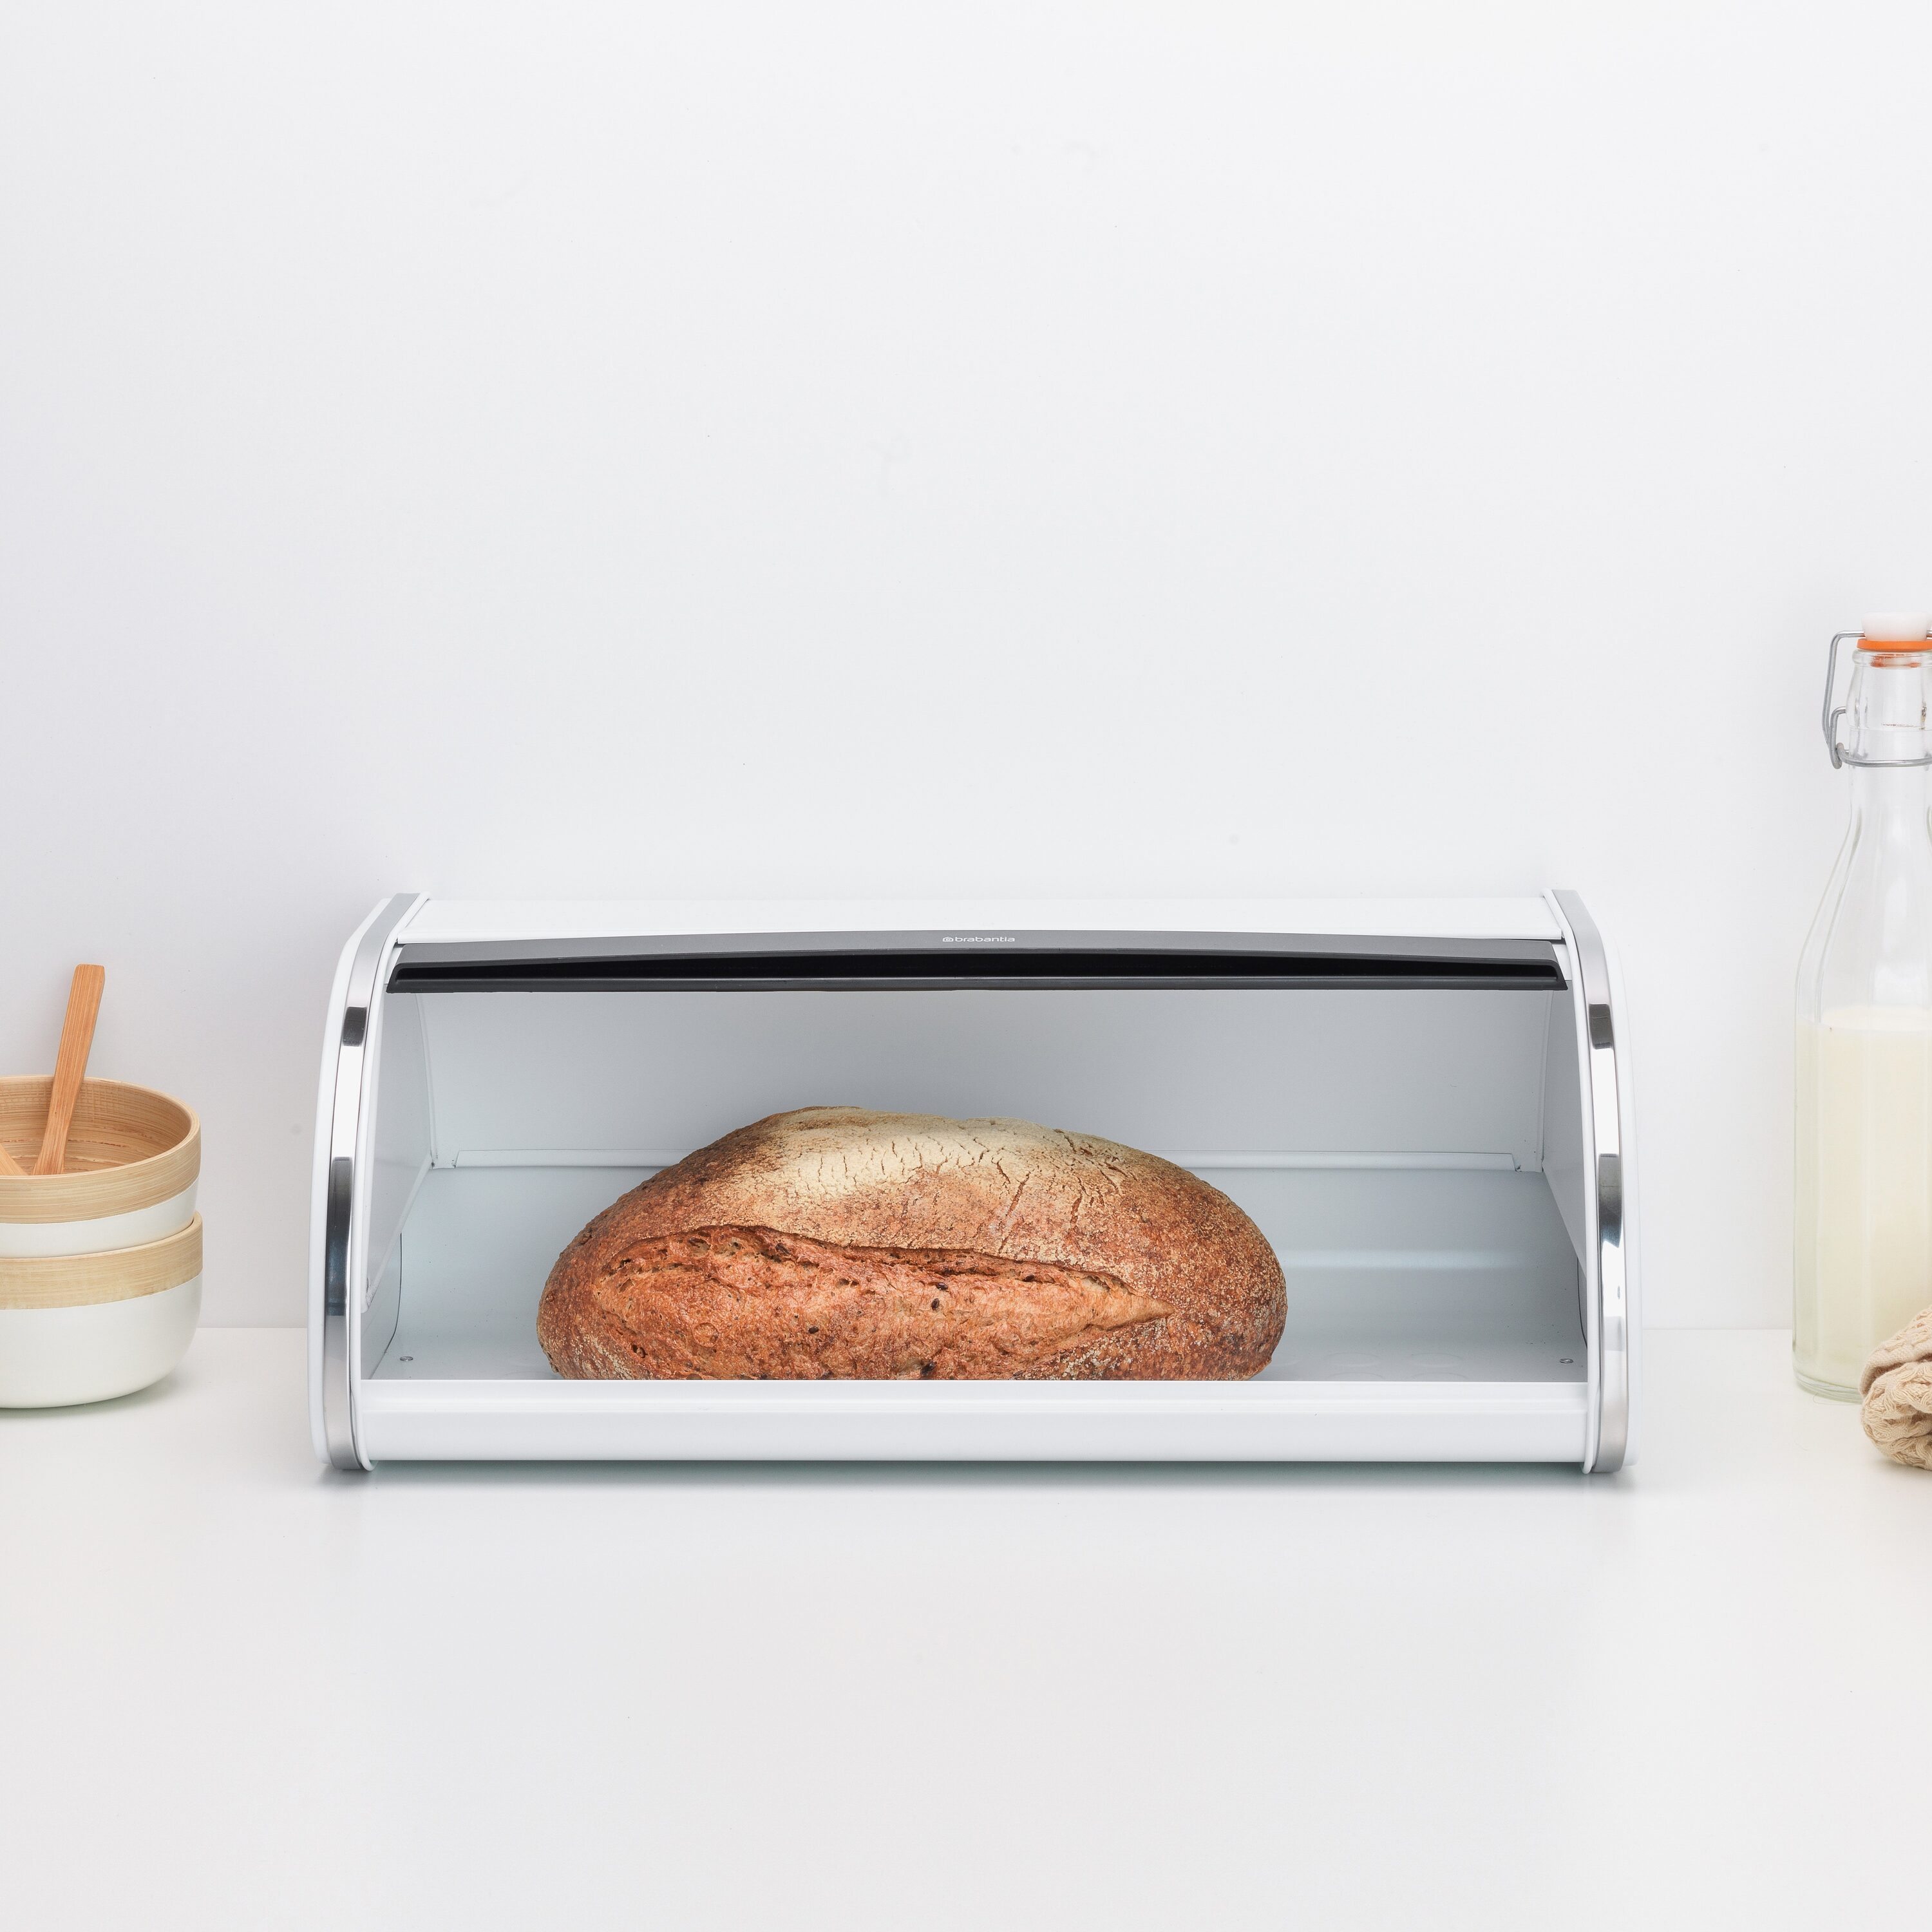 Brabantia 19-quart Steel Bpa-free Reusable Bread Box in the Food